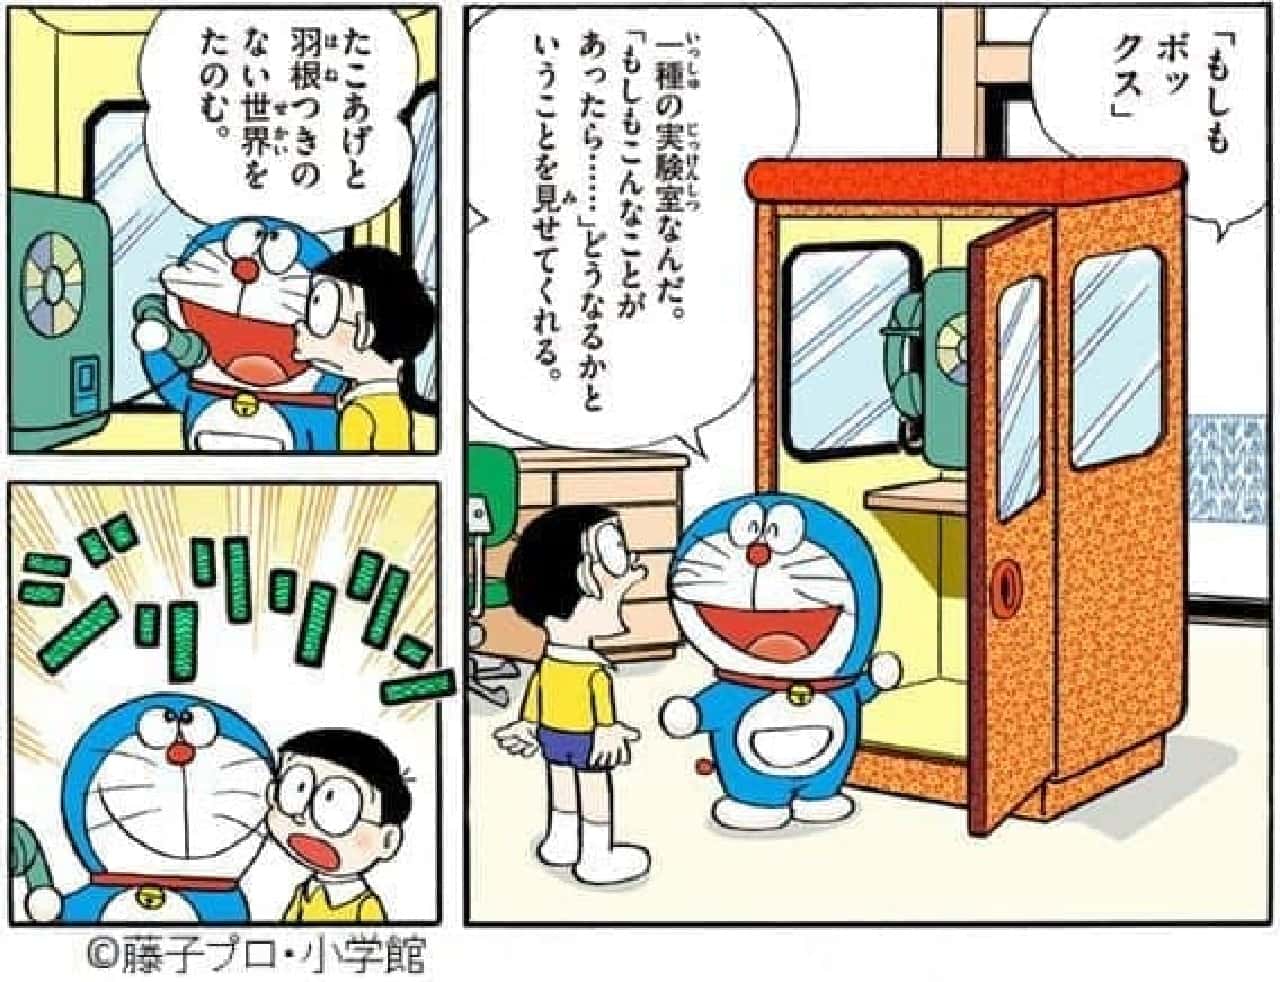 Which secret tool did you like? (Source: "Doraemon Digital Color Version" Volume 45 ")